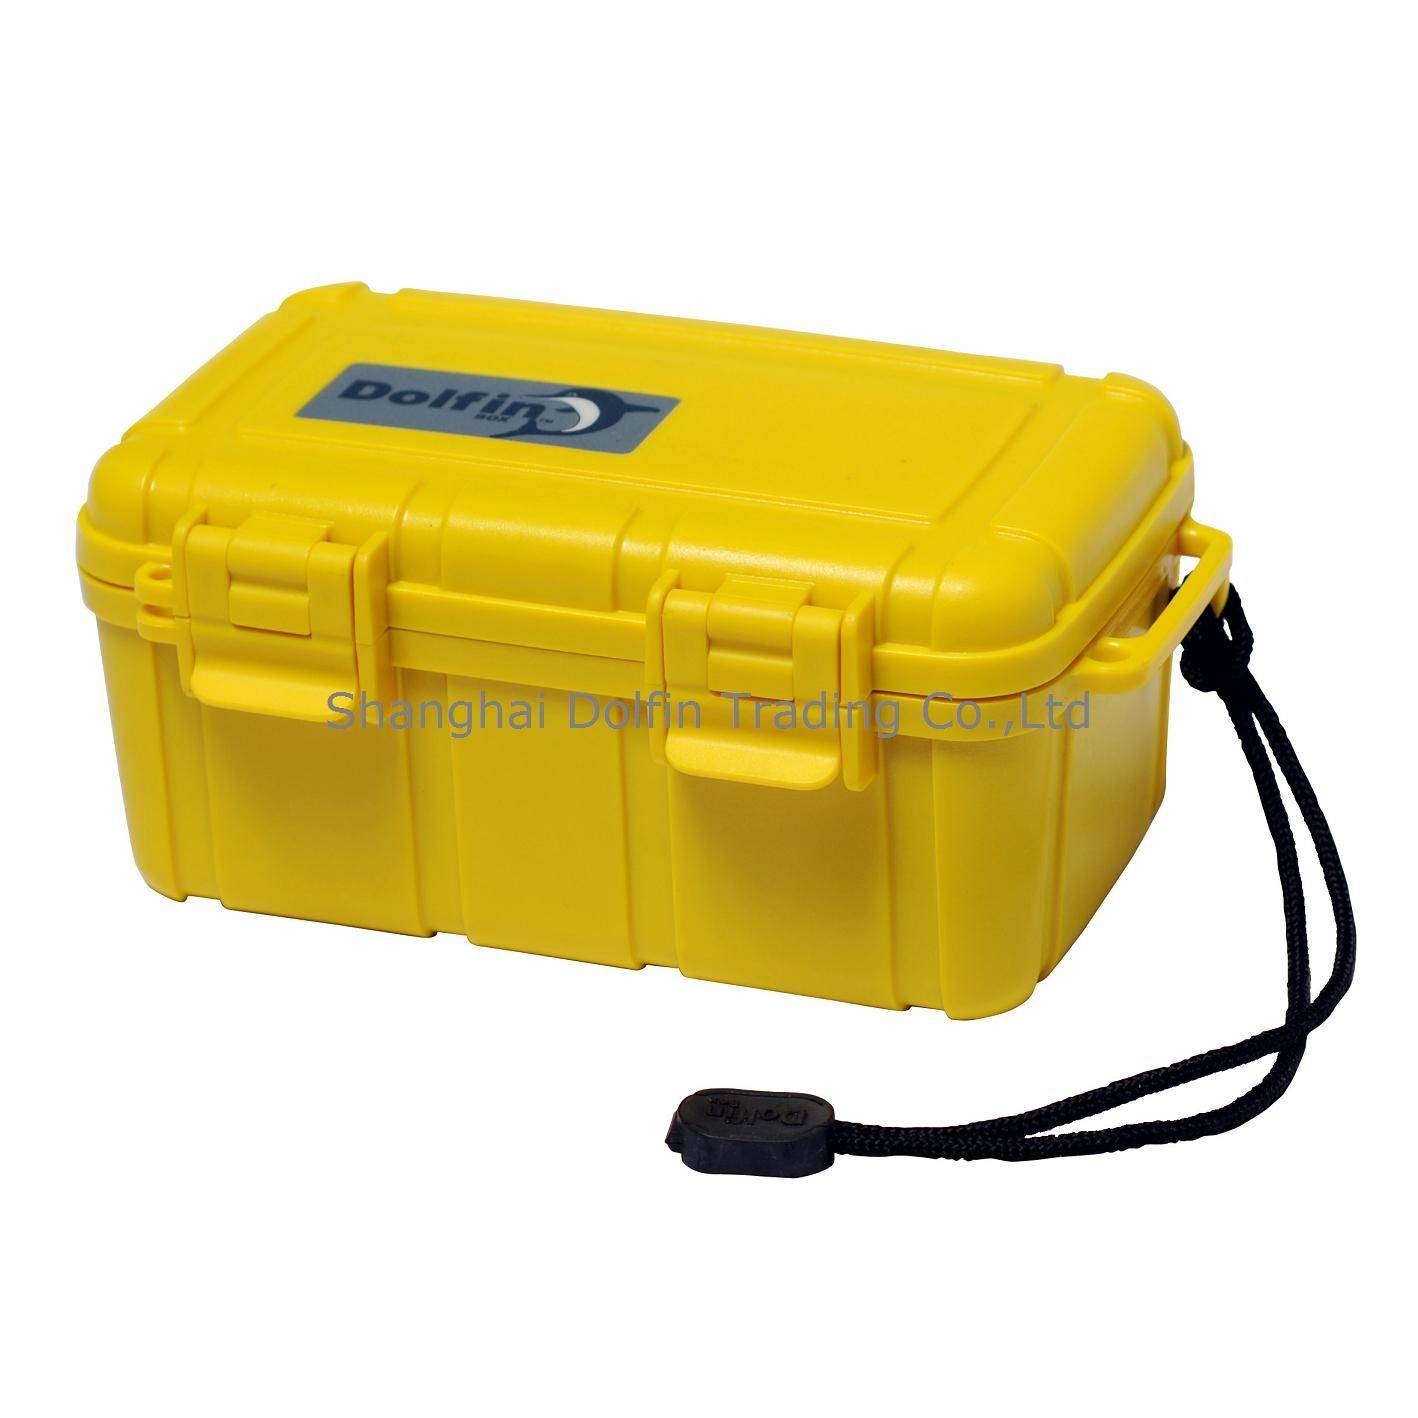 waterproof box case watertight equipment dolfin shanghai trading ltd sports diytrade